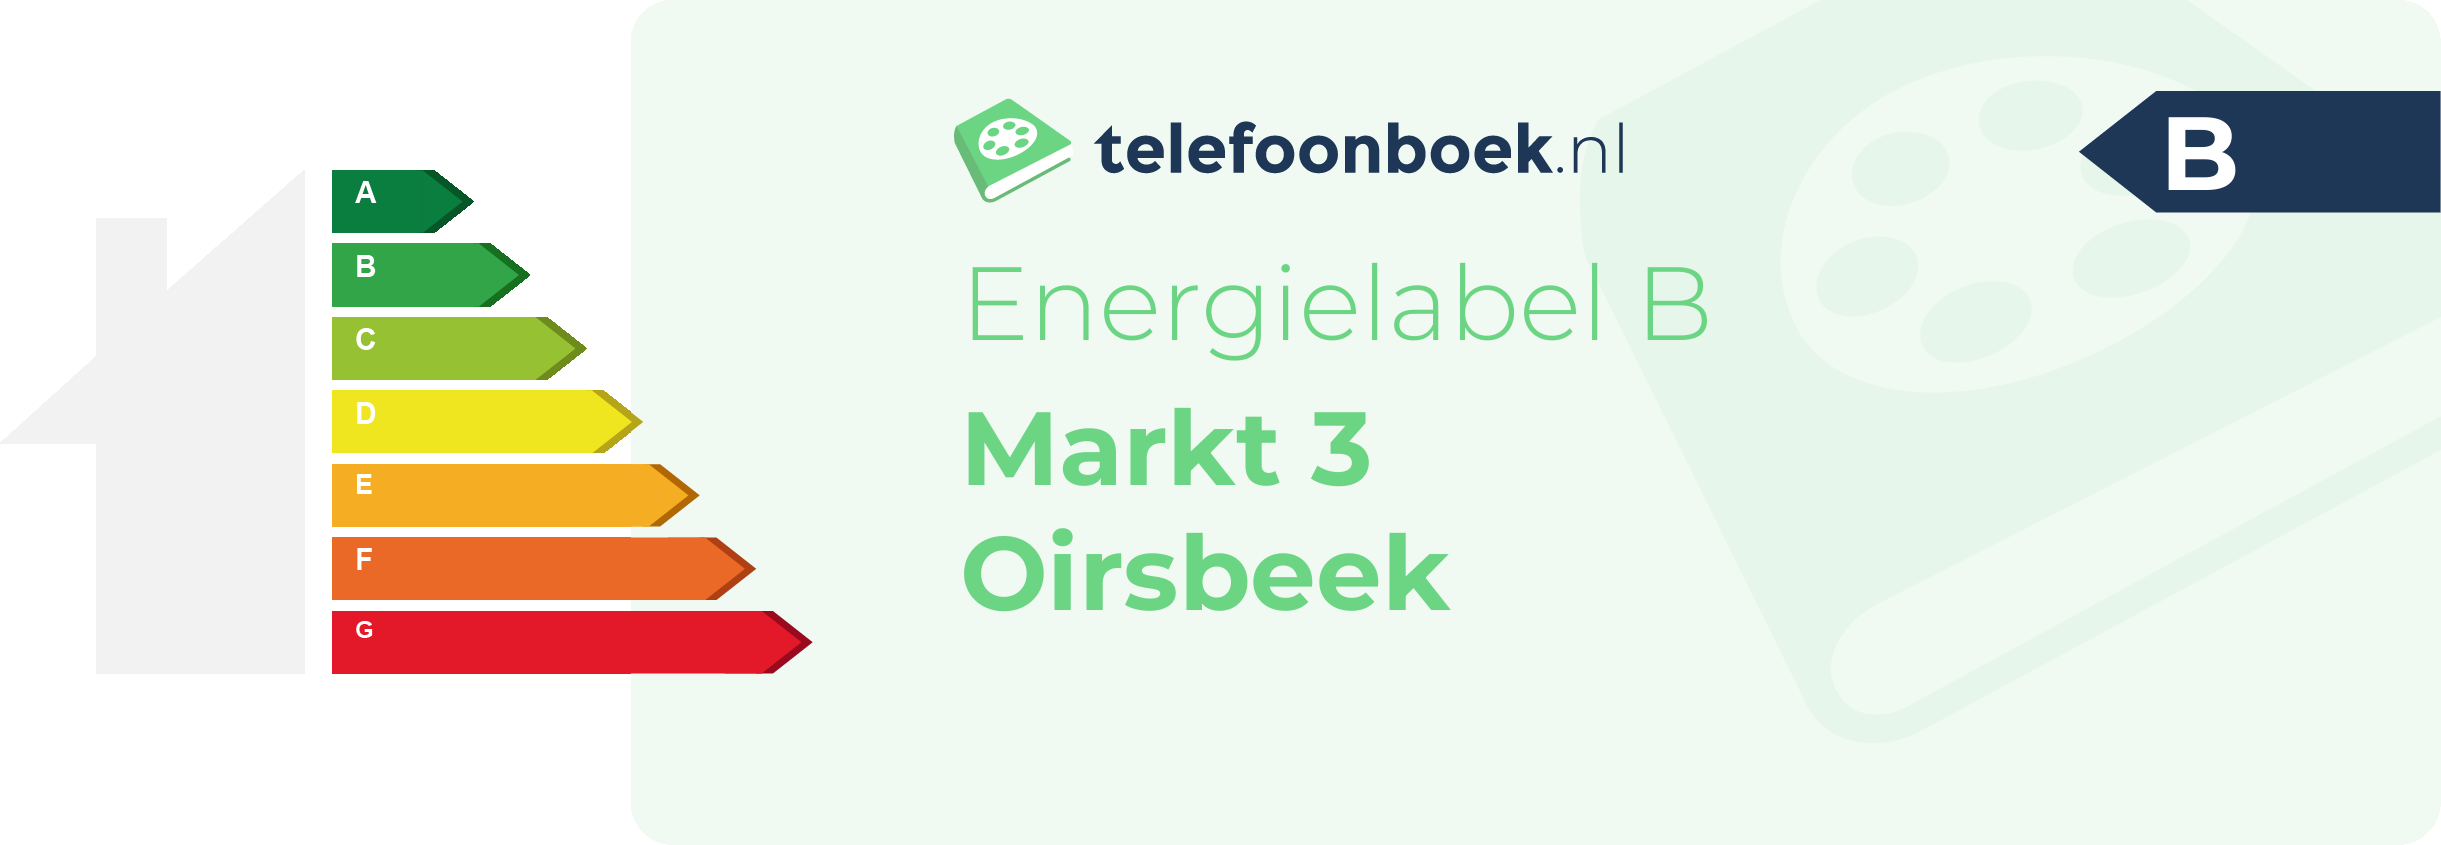 Energielabel Markt 3 Oirsbeek